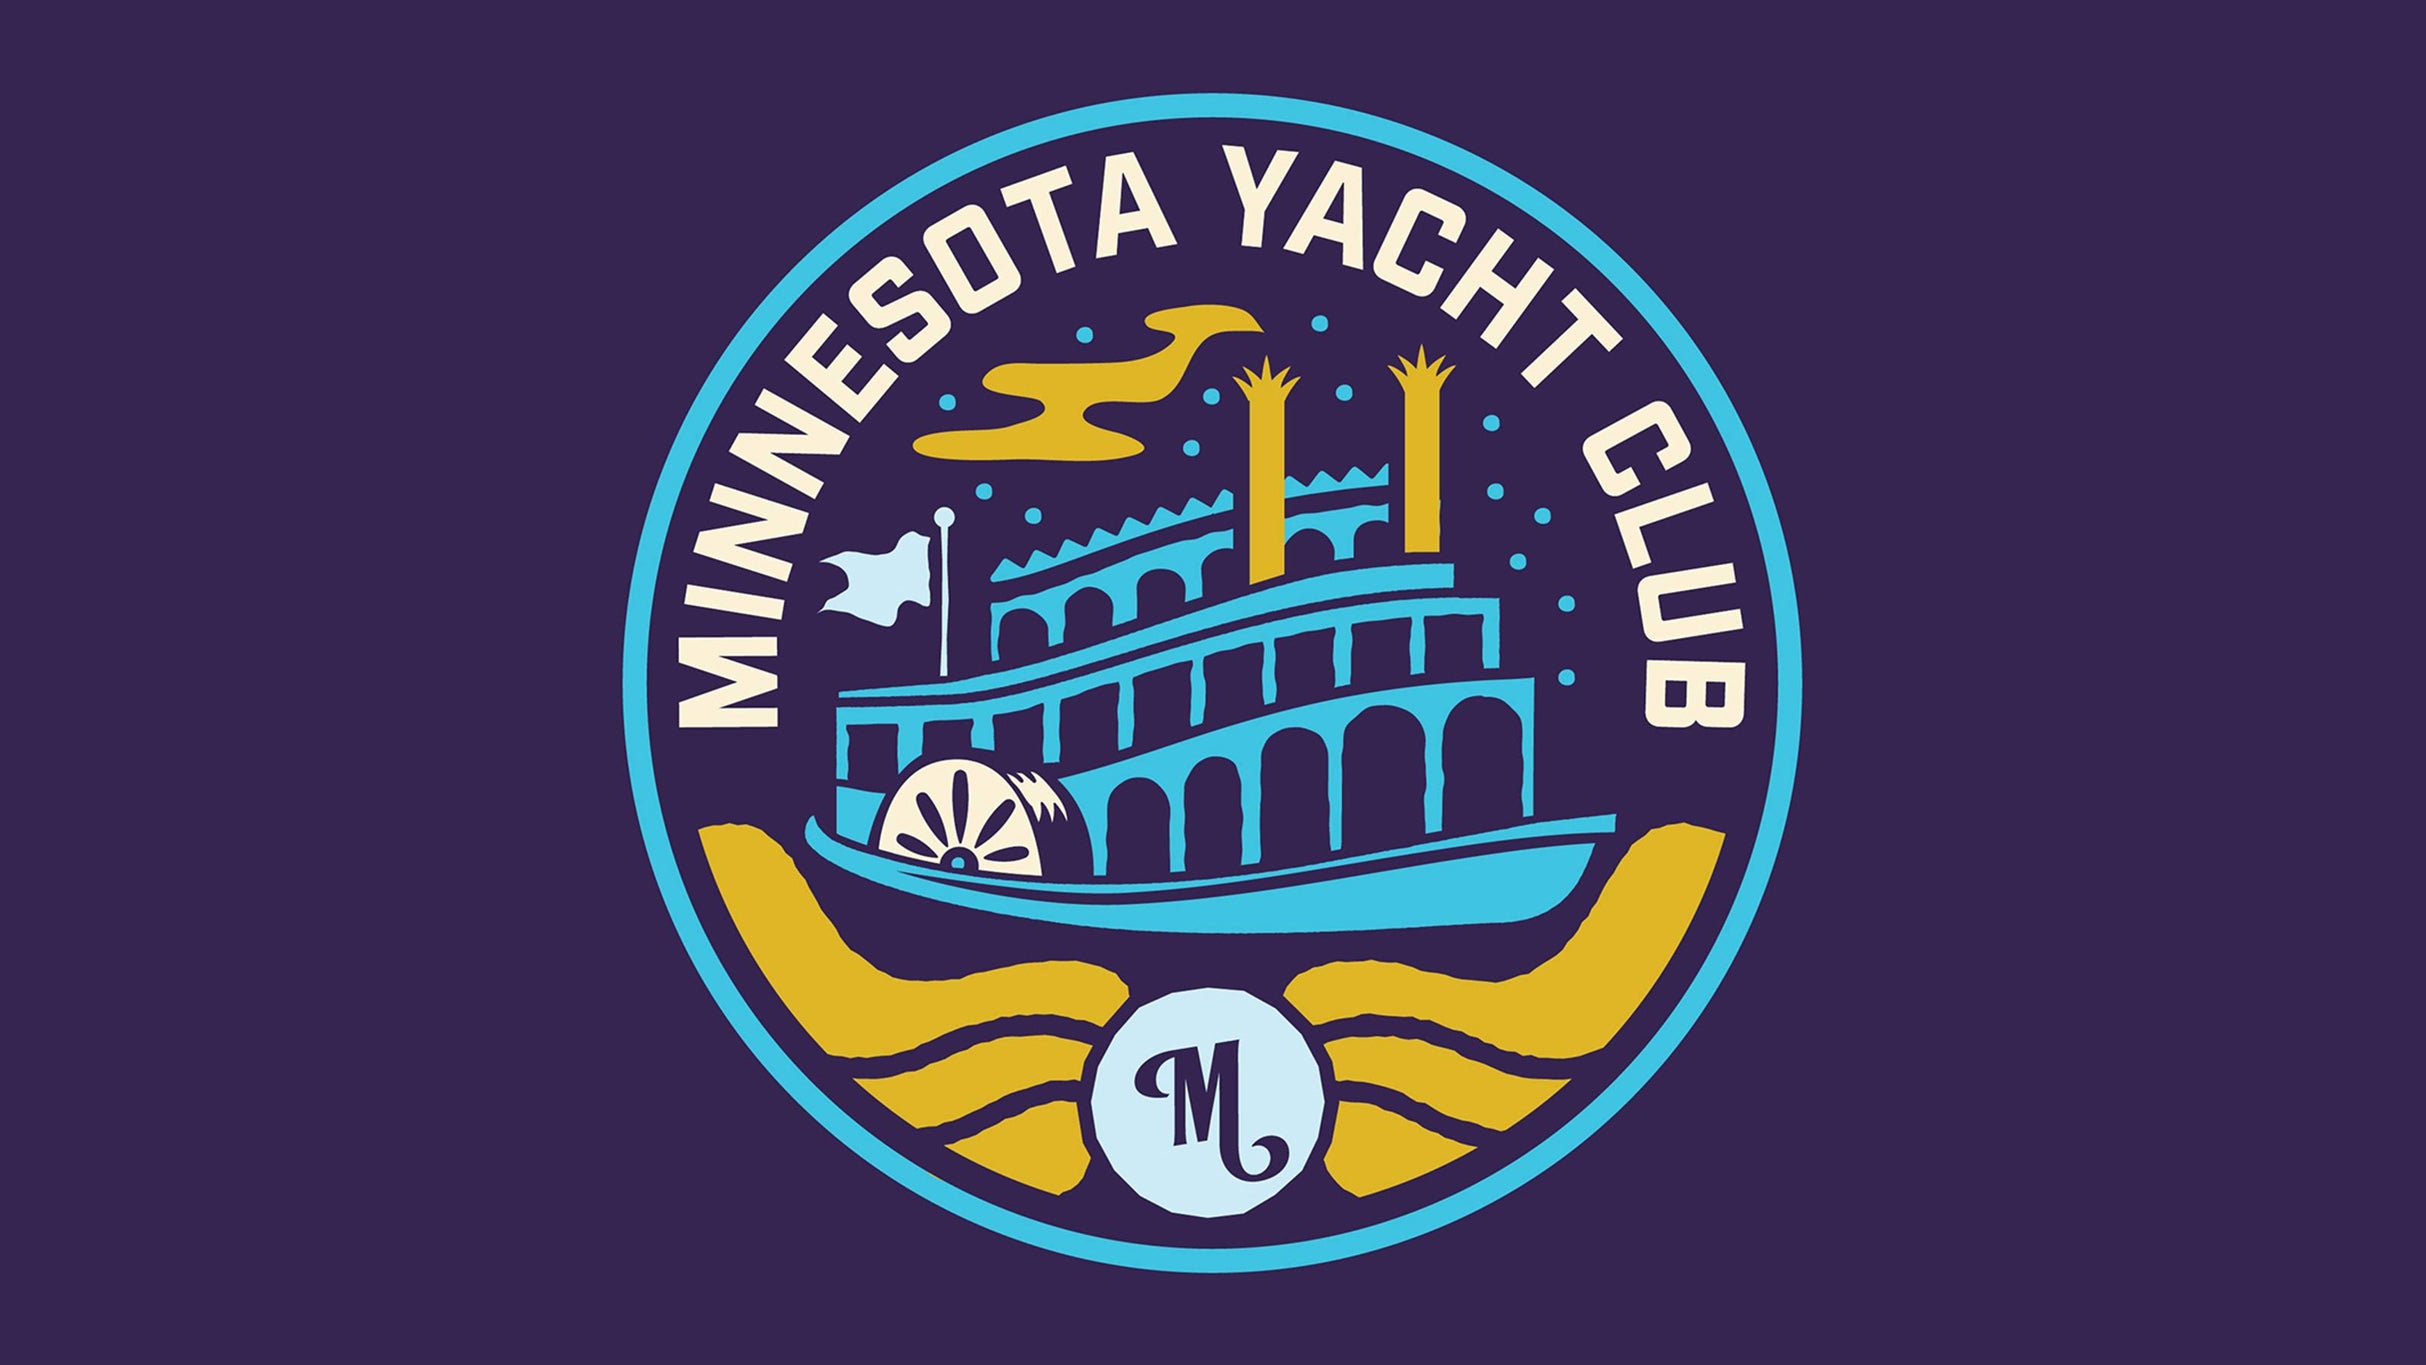 Minnesota Yacht Club Festival presale information on freepresalepasswords.com